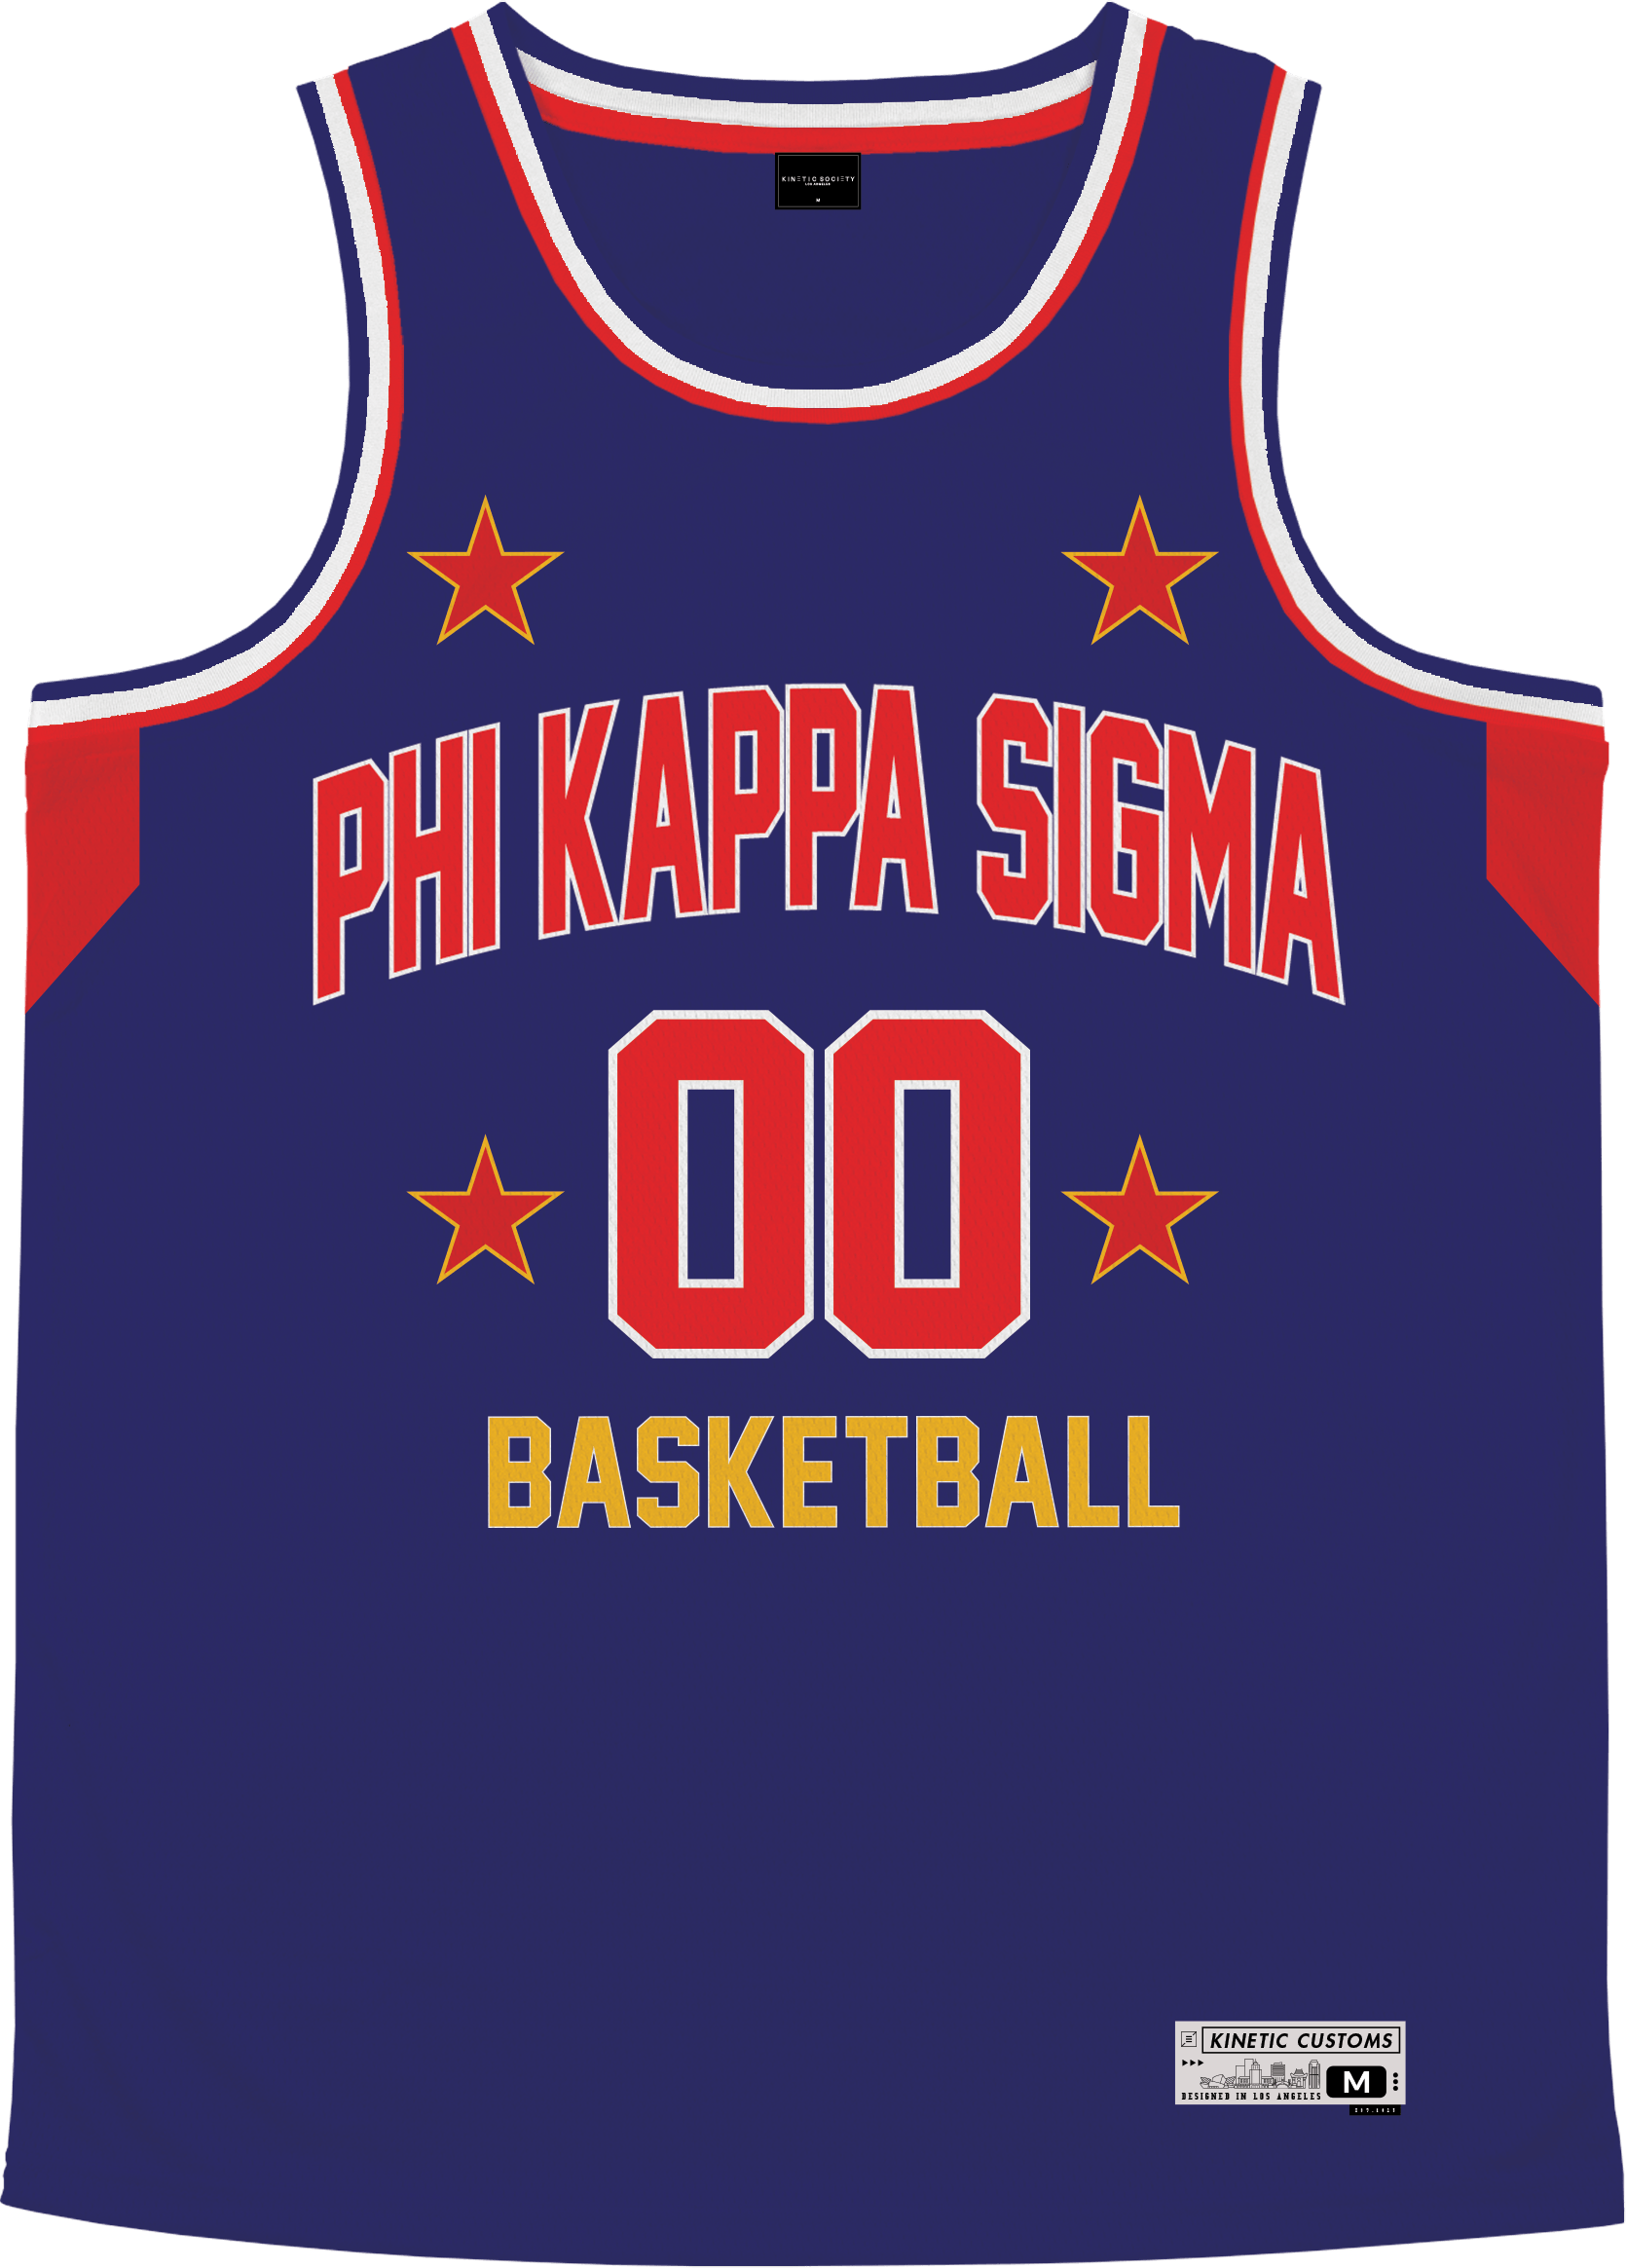 Phi Kappa Sigma - Retro Ballers Basketball Jersey - Kinetic Society